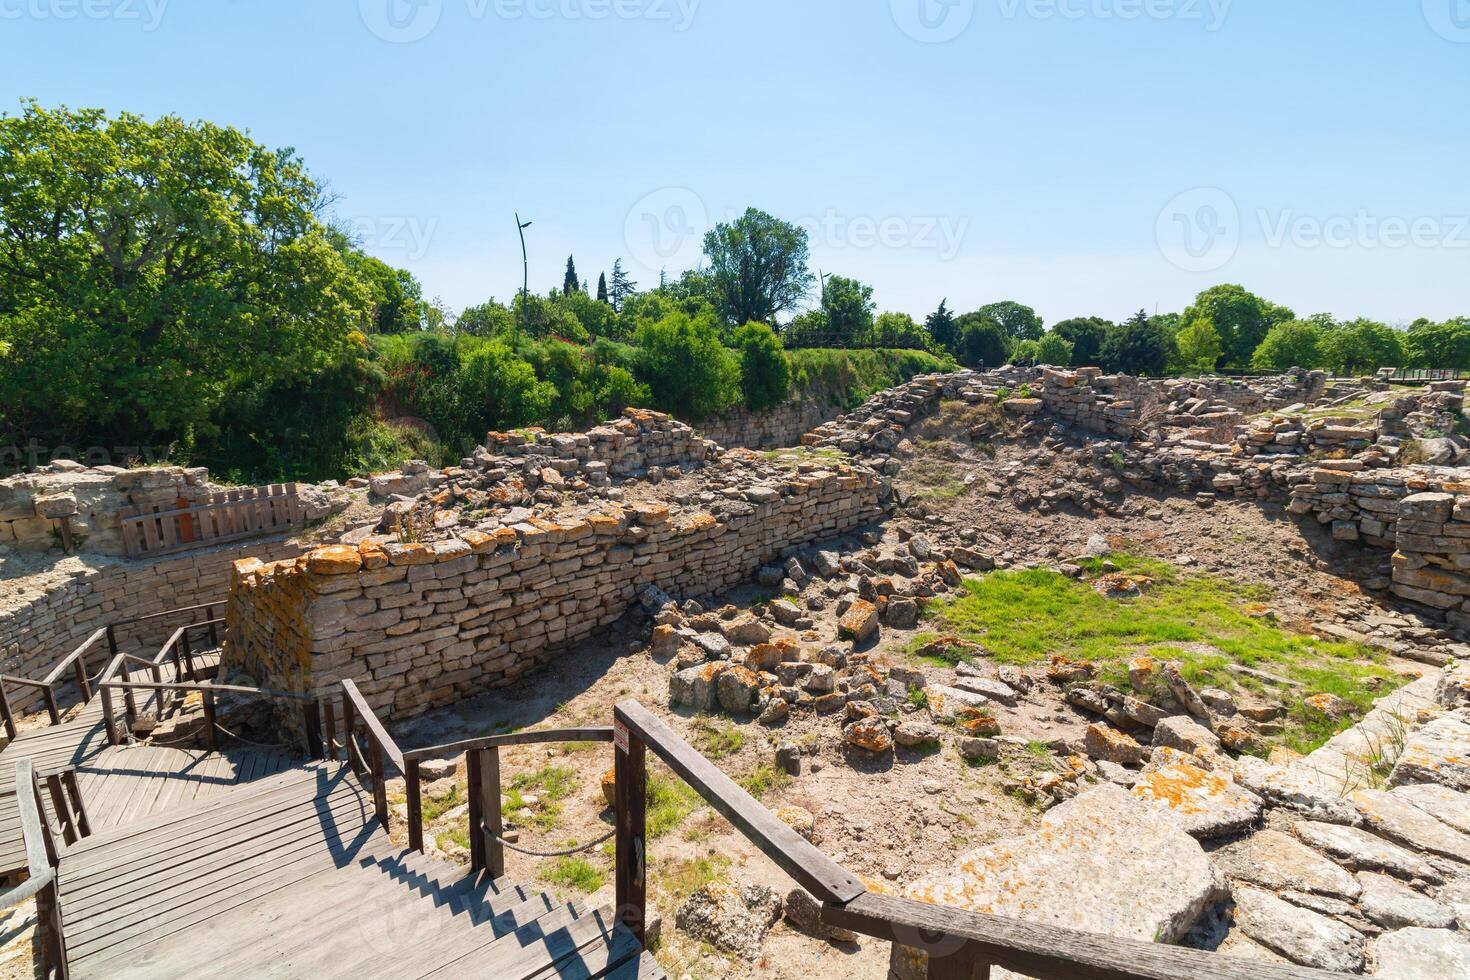 troy oude stad ruïnes visie. bezoek turkiye concept achtergrond foto